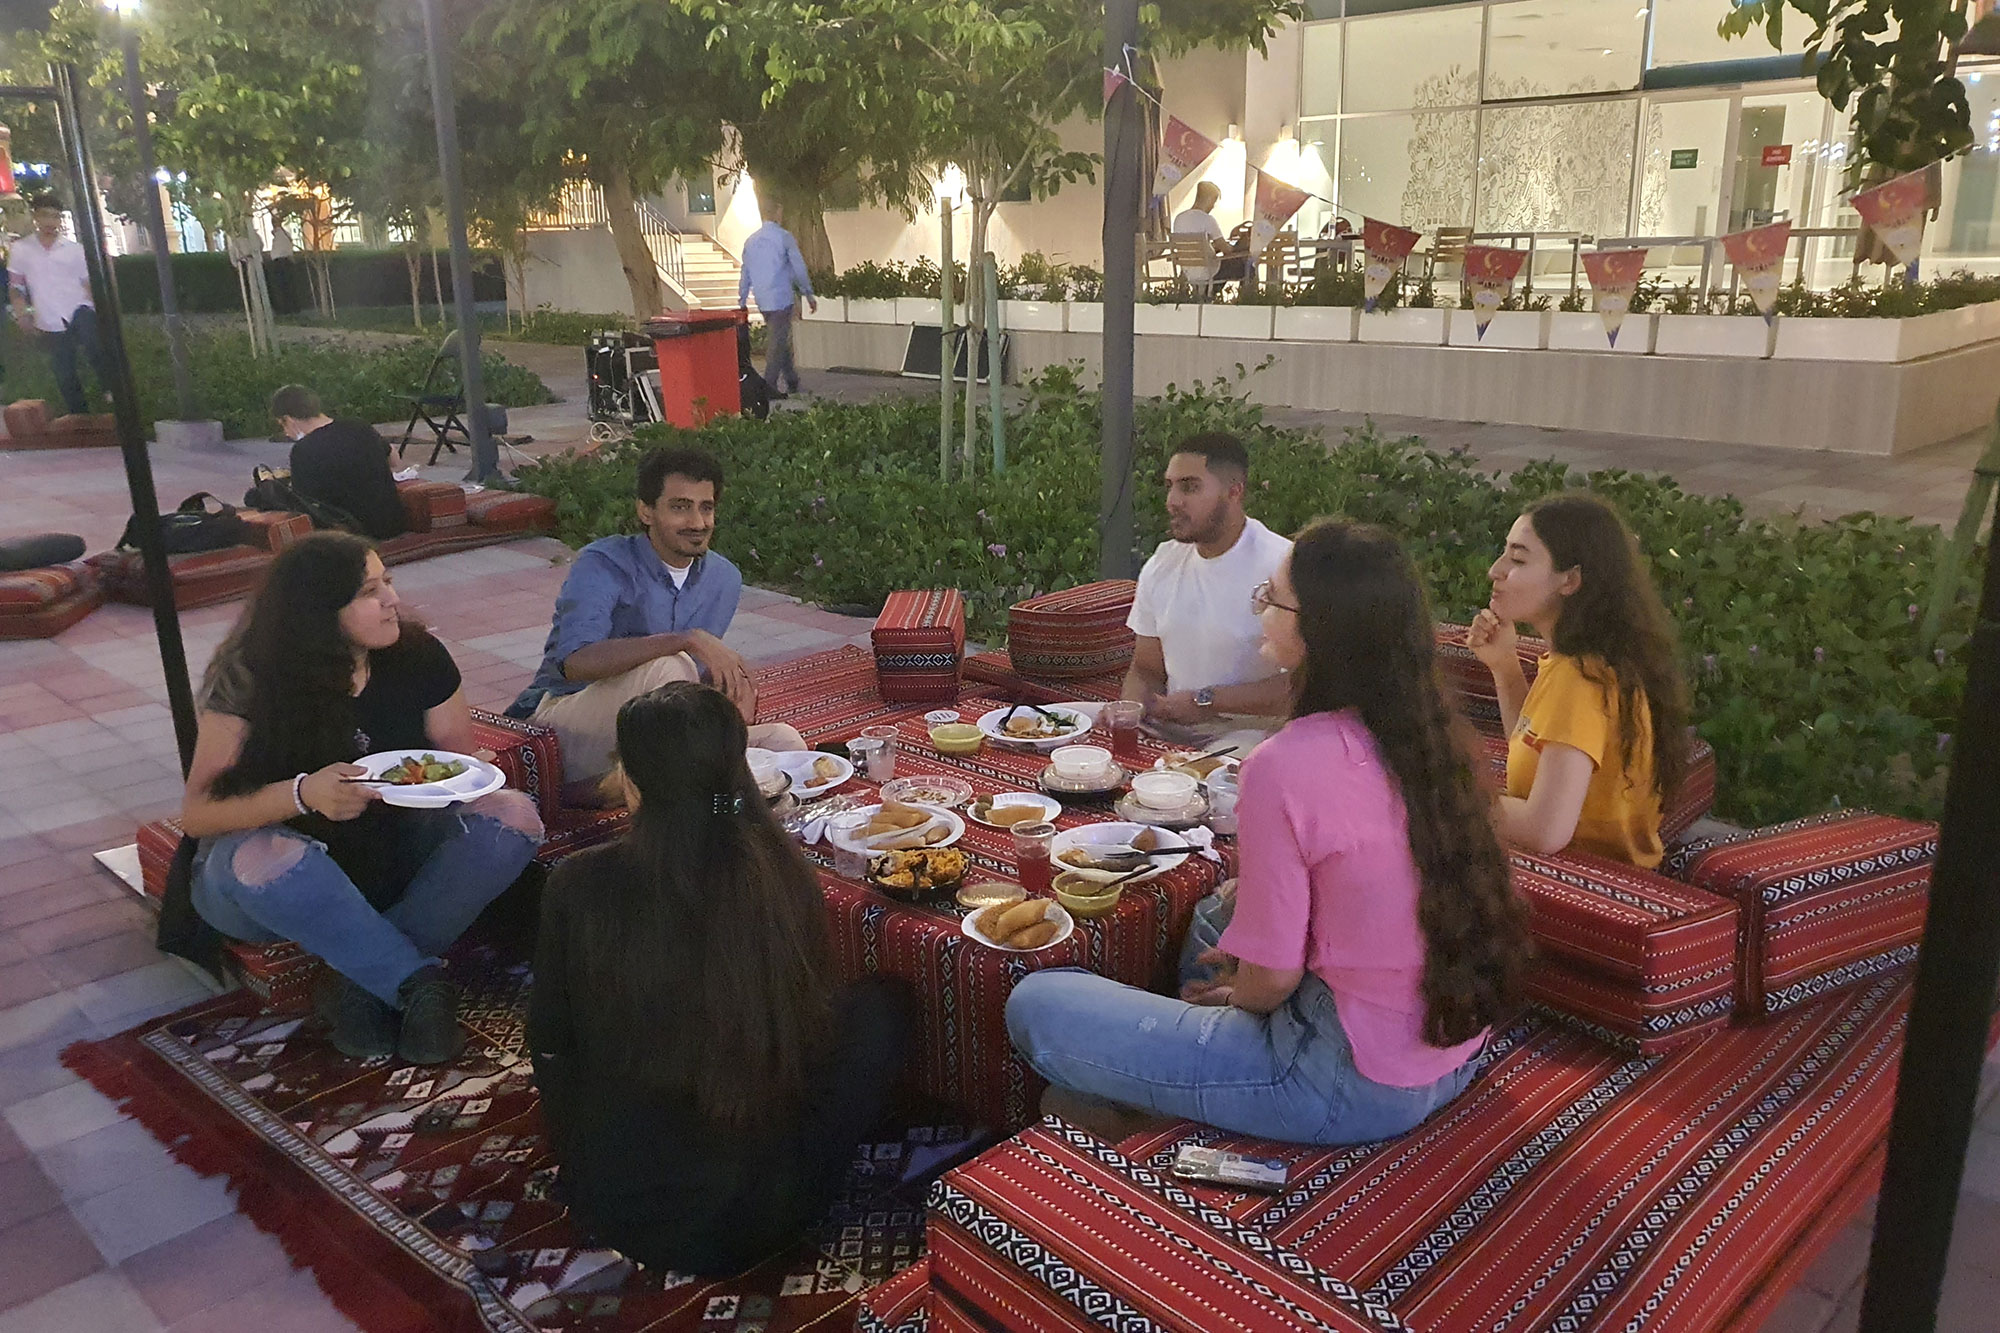 “Celebrating Ramadan in Dubai, U.A.E.” by Hajraj Jalil